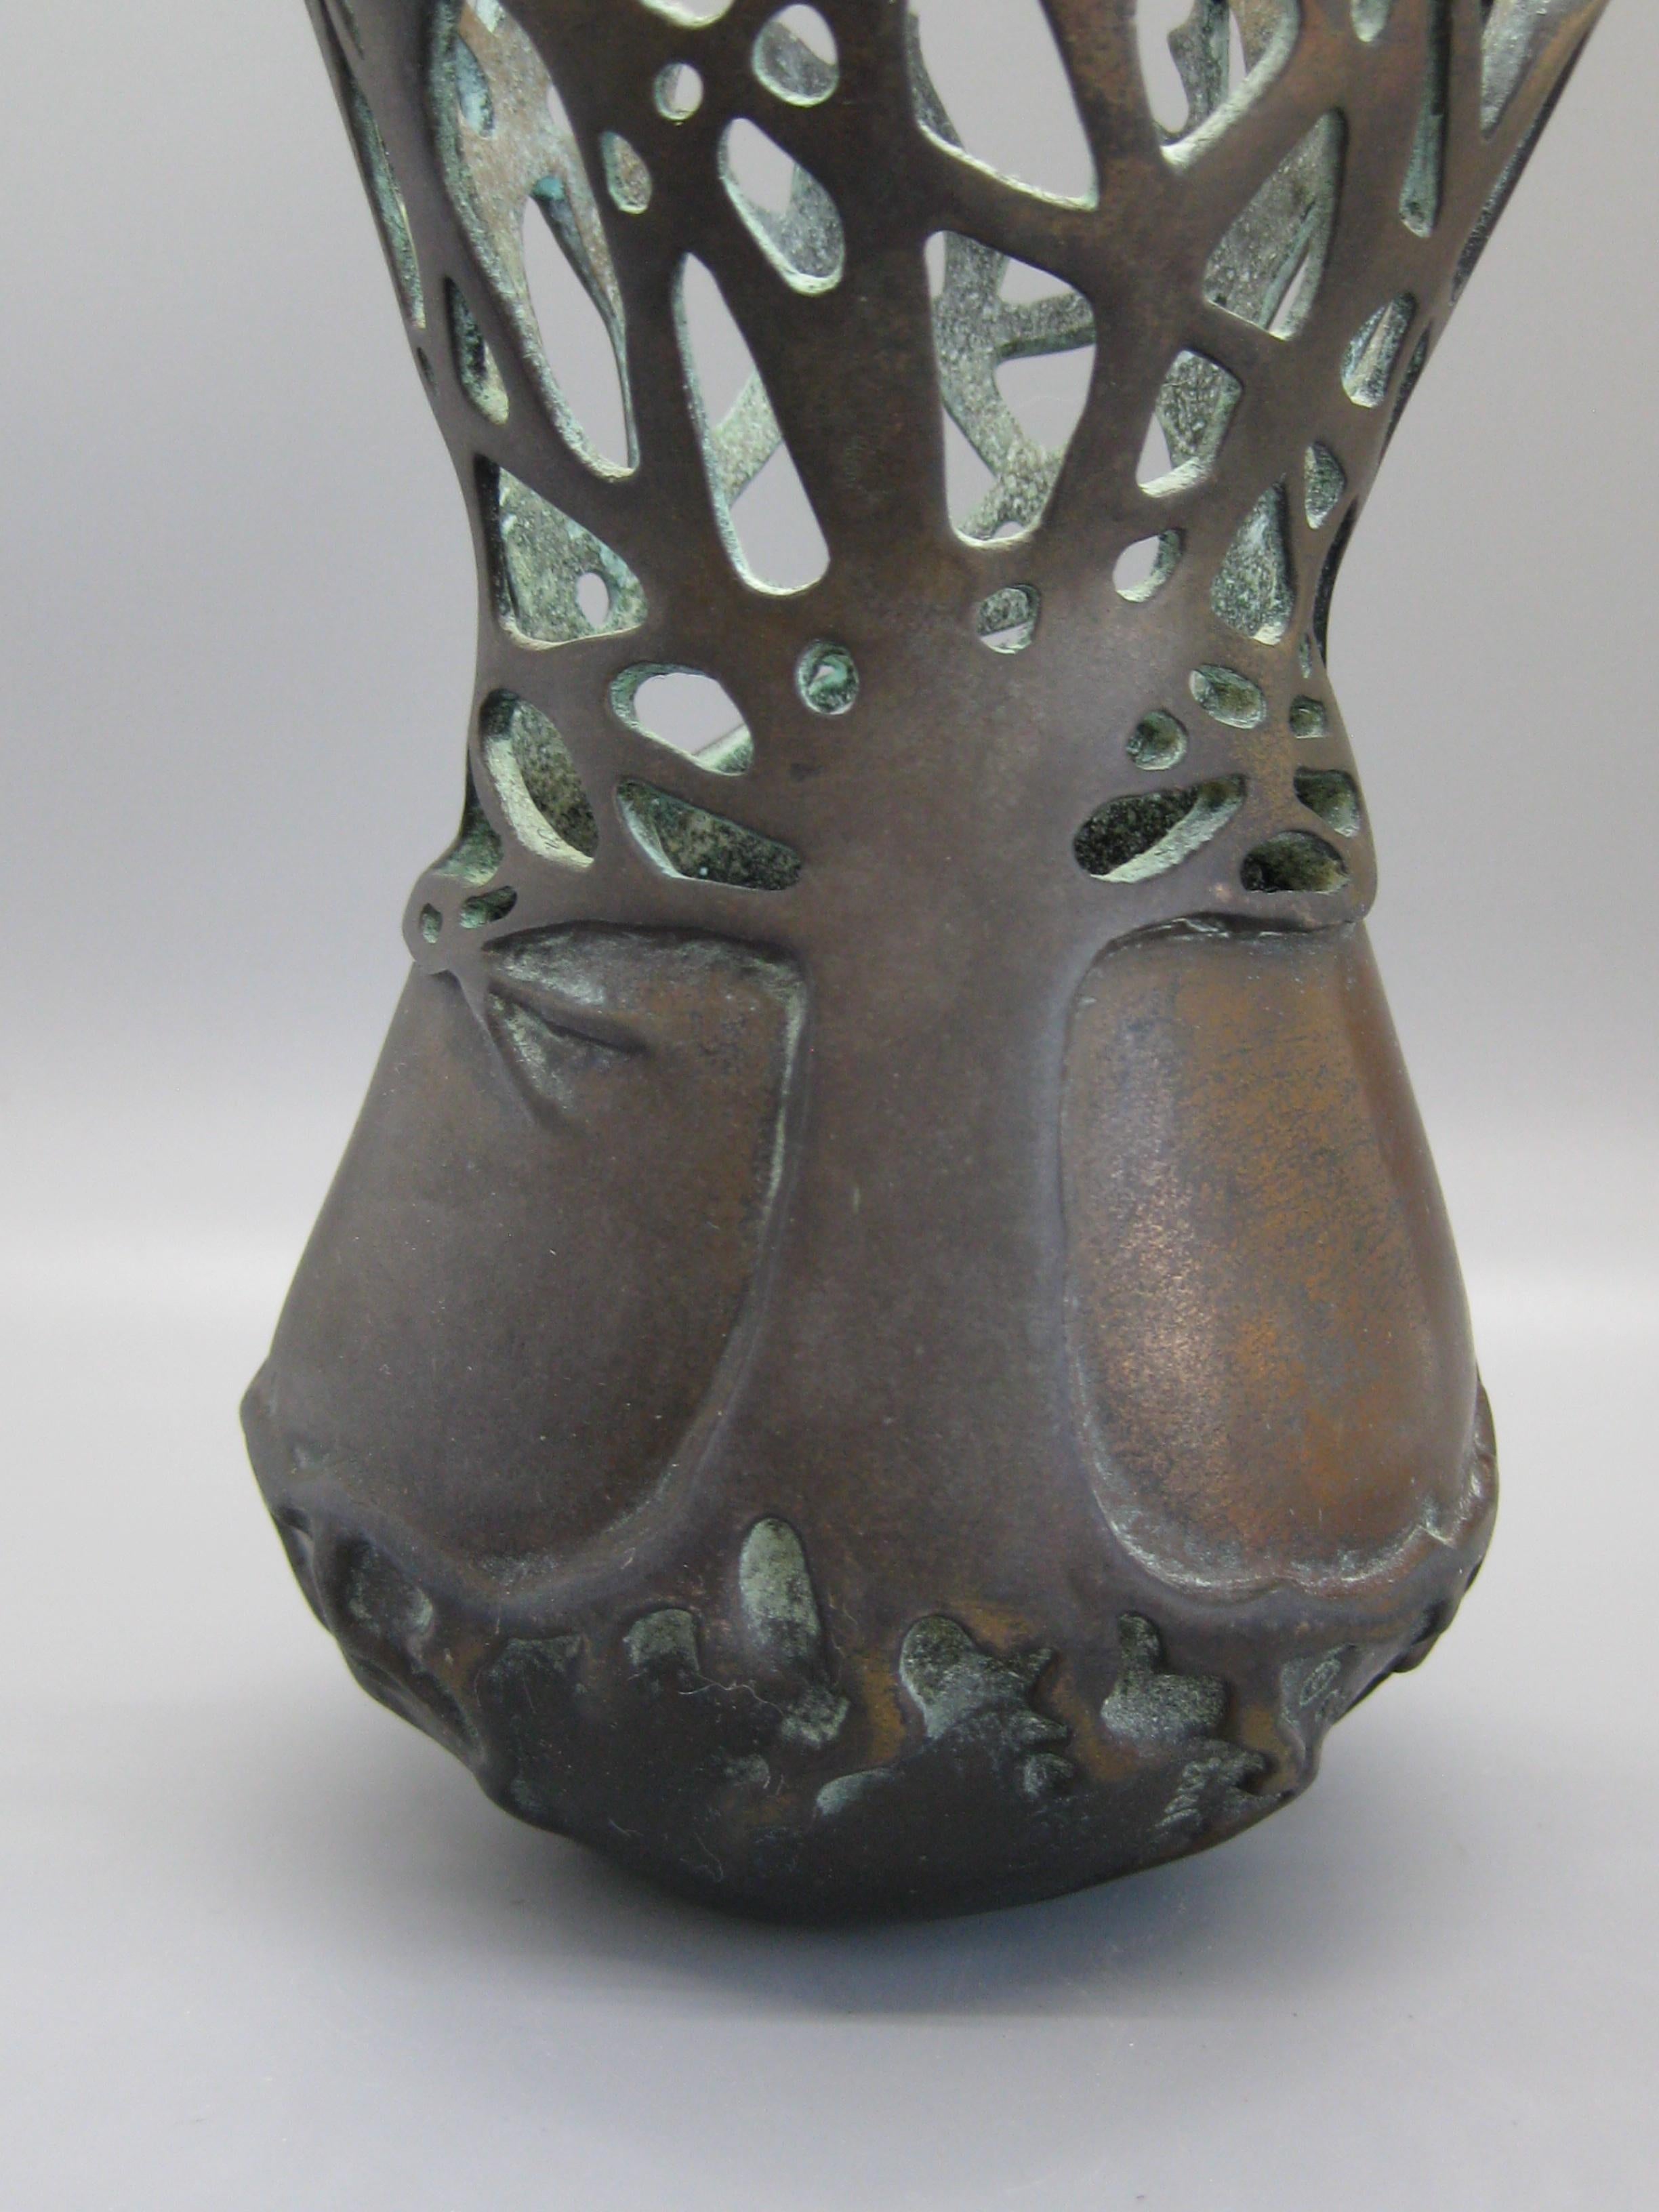 Contemporary 2001 Carol Alleman Organic Midcentury Bronze Vase Vessel Sculpture Limited 75 For Sale